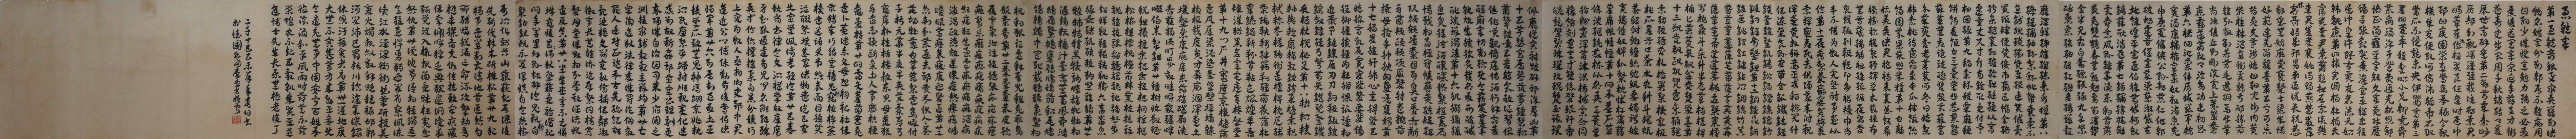 huang xiang enlightenment